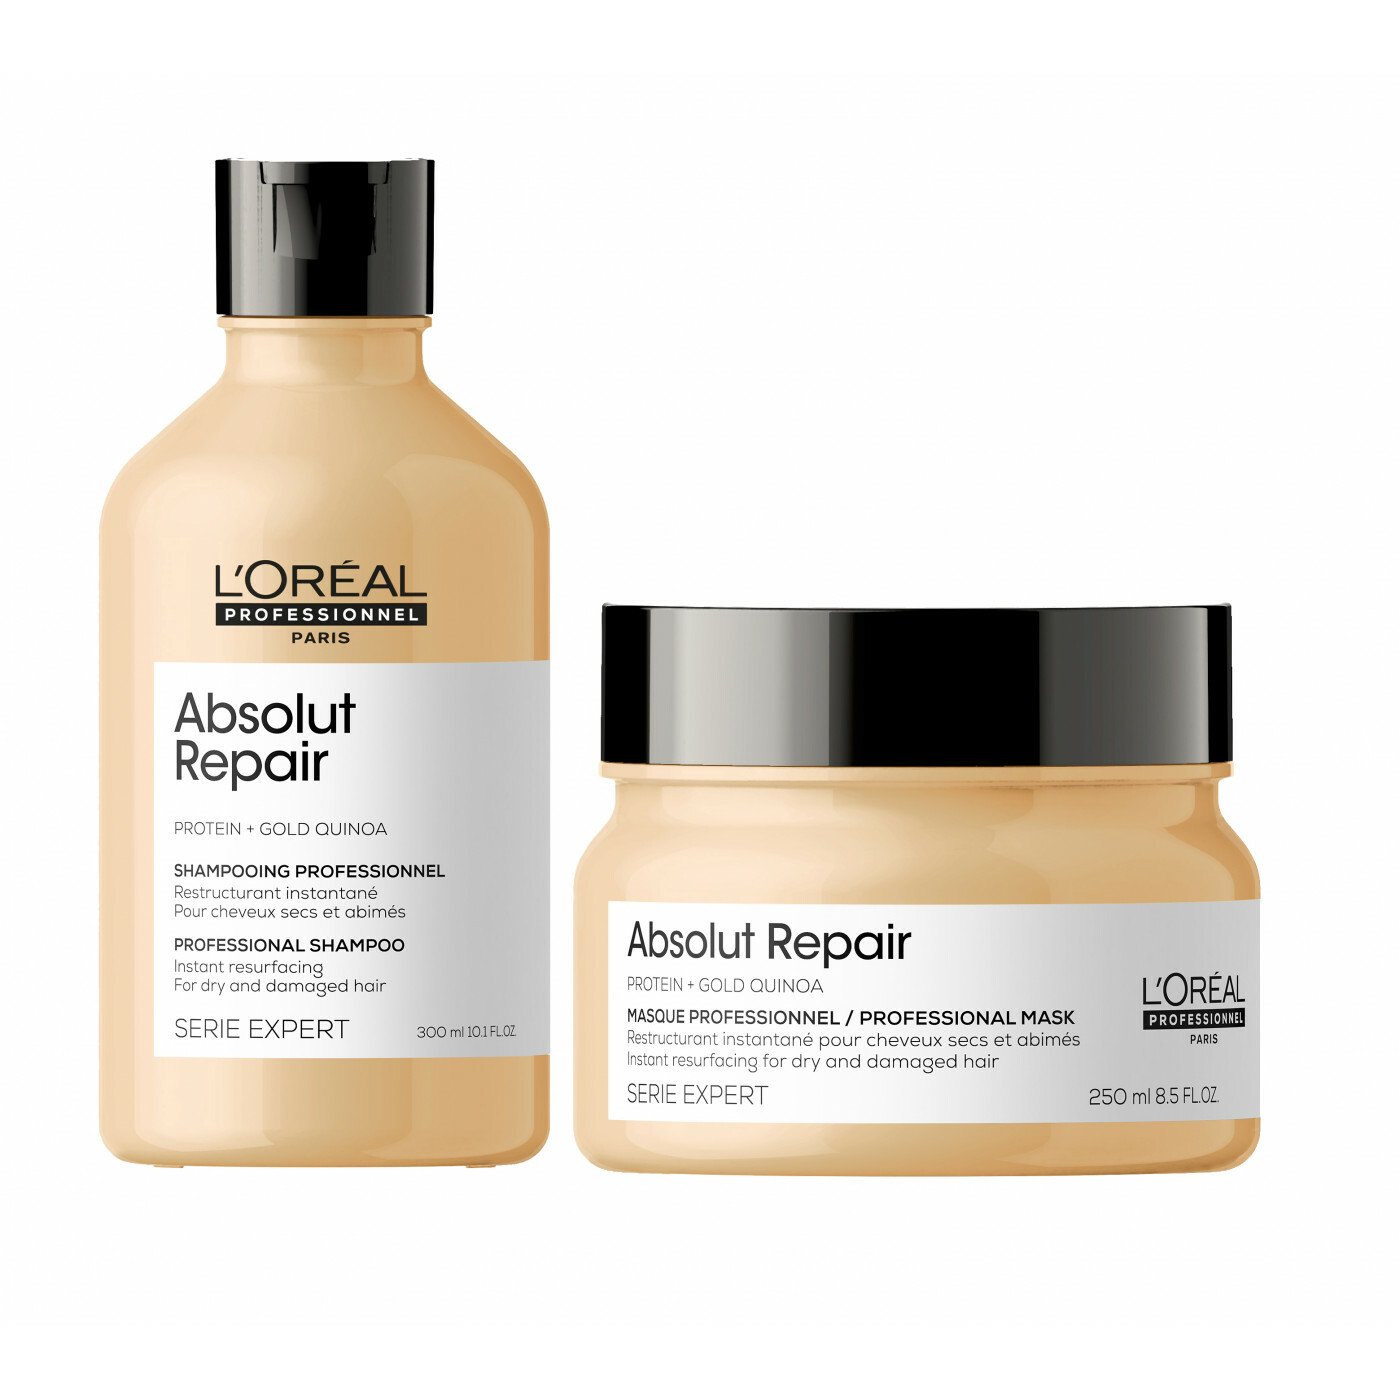 loreal se lipidium absolut repair szampon